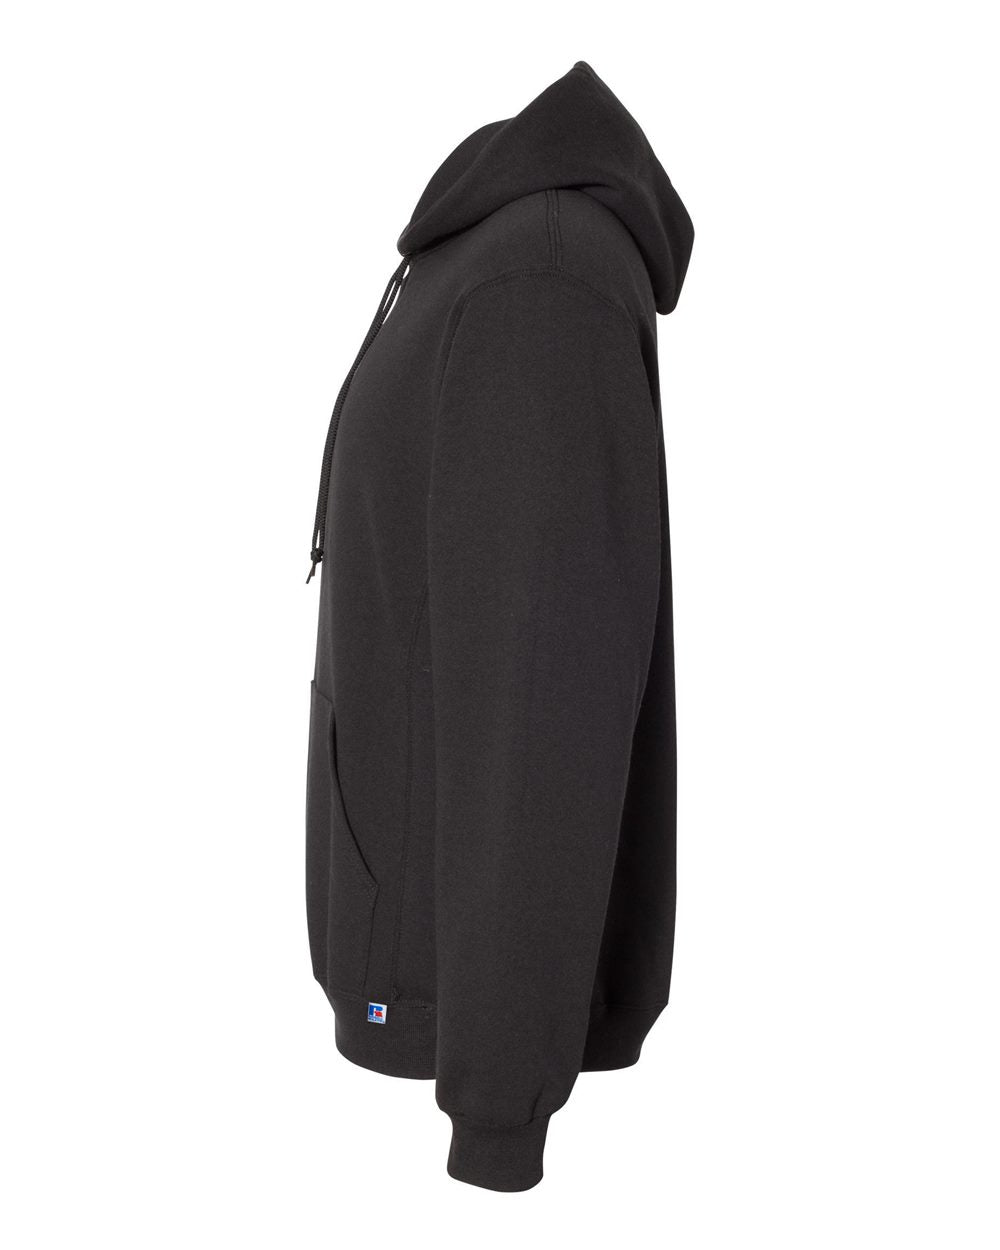 Russell Athletic Dri Power® Hooded Sweatshirt 695HBM #color_Black